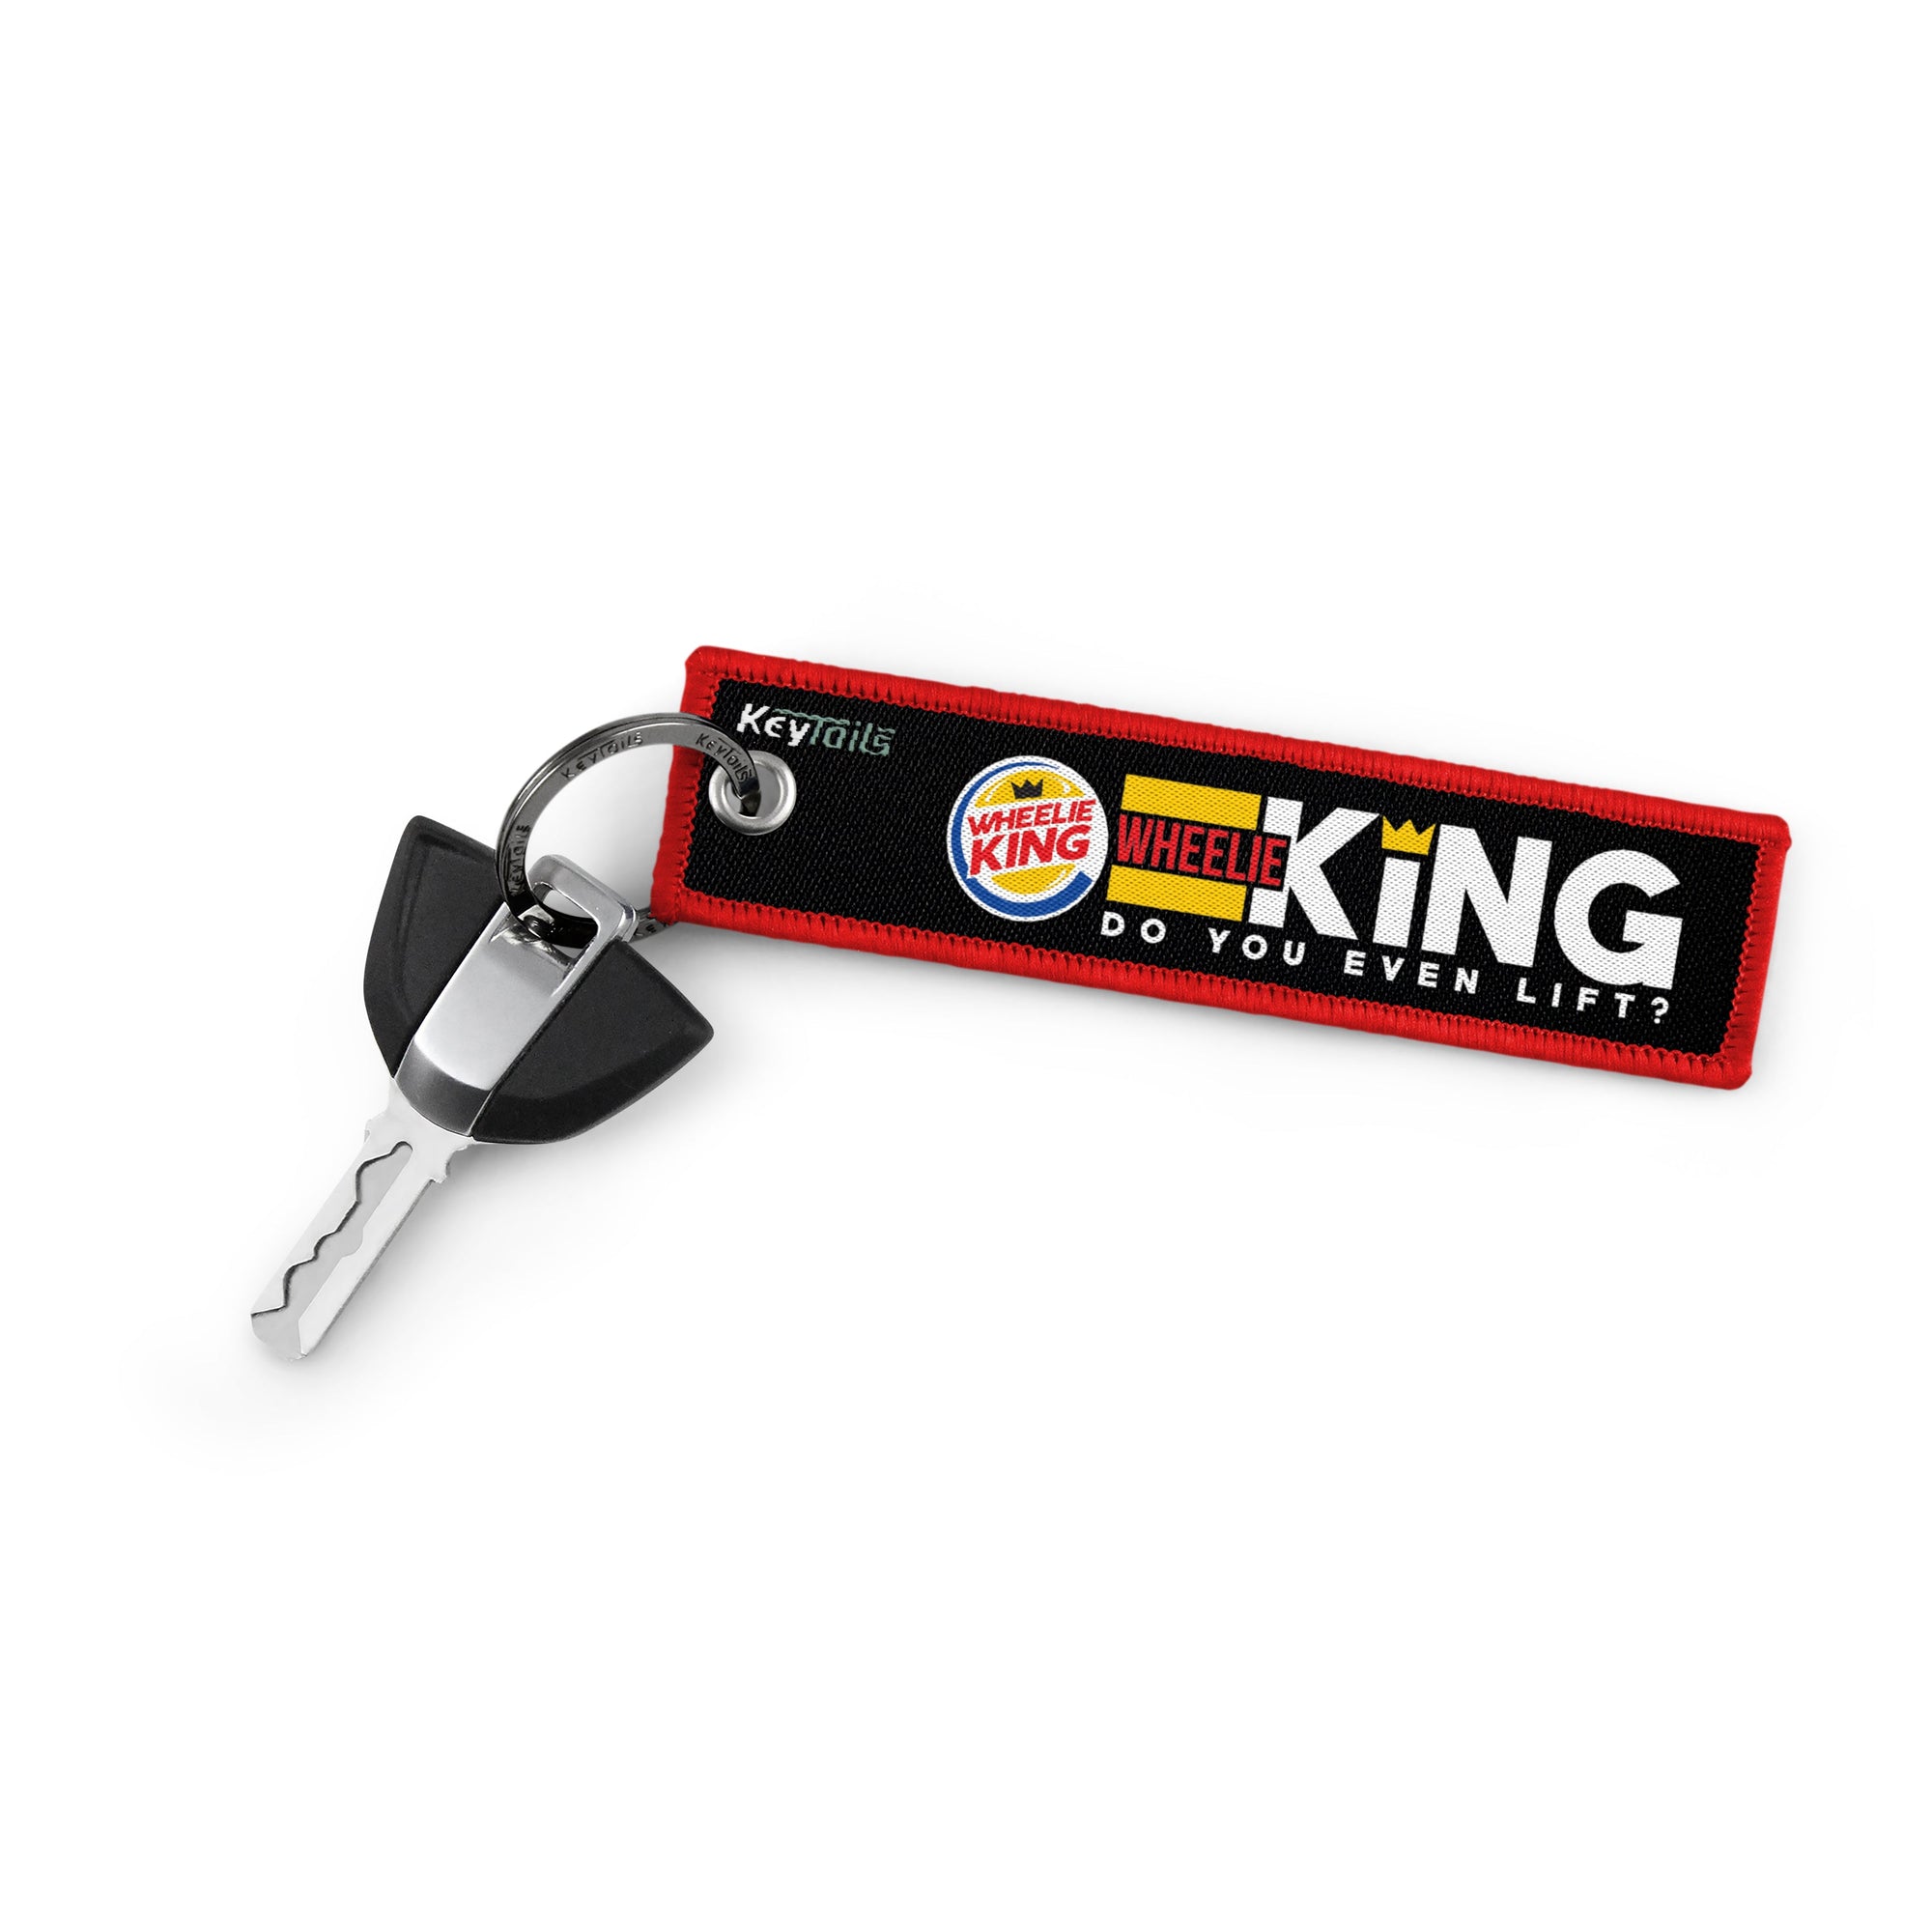 Wheelie King Keychain, Key Tag - Red